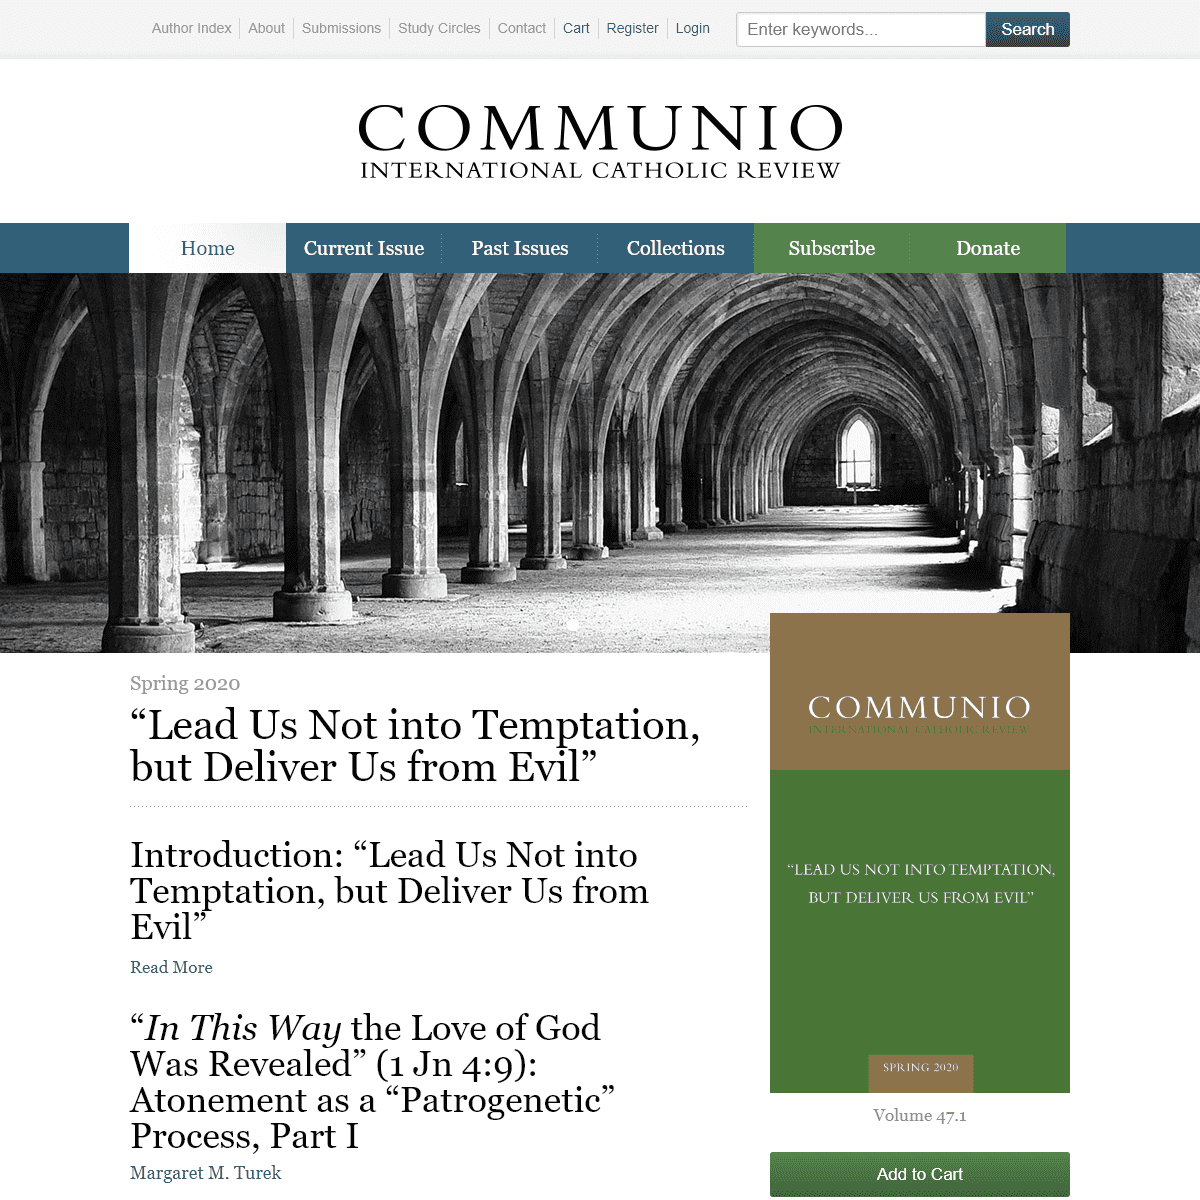 A complete backup of communio-icr.com